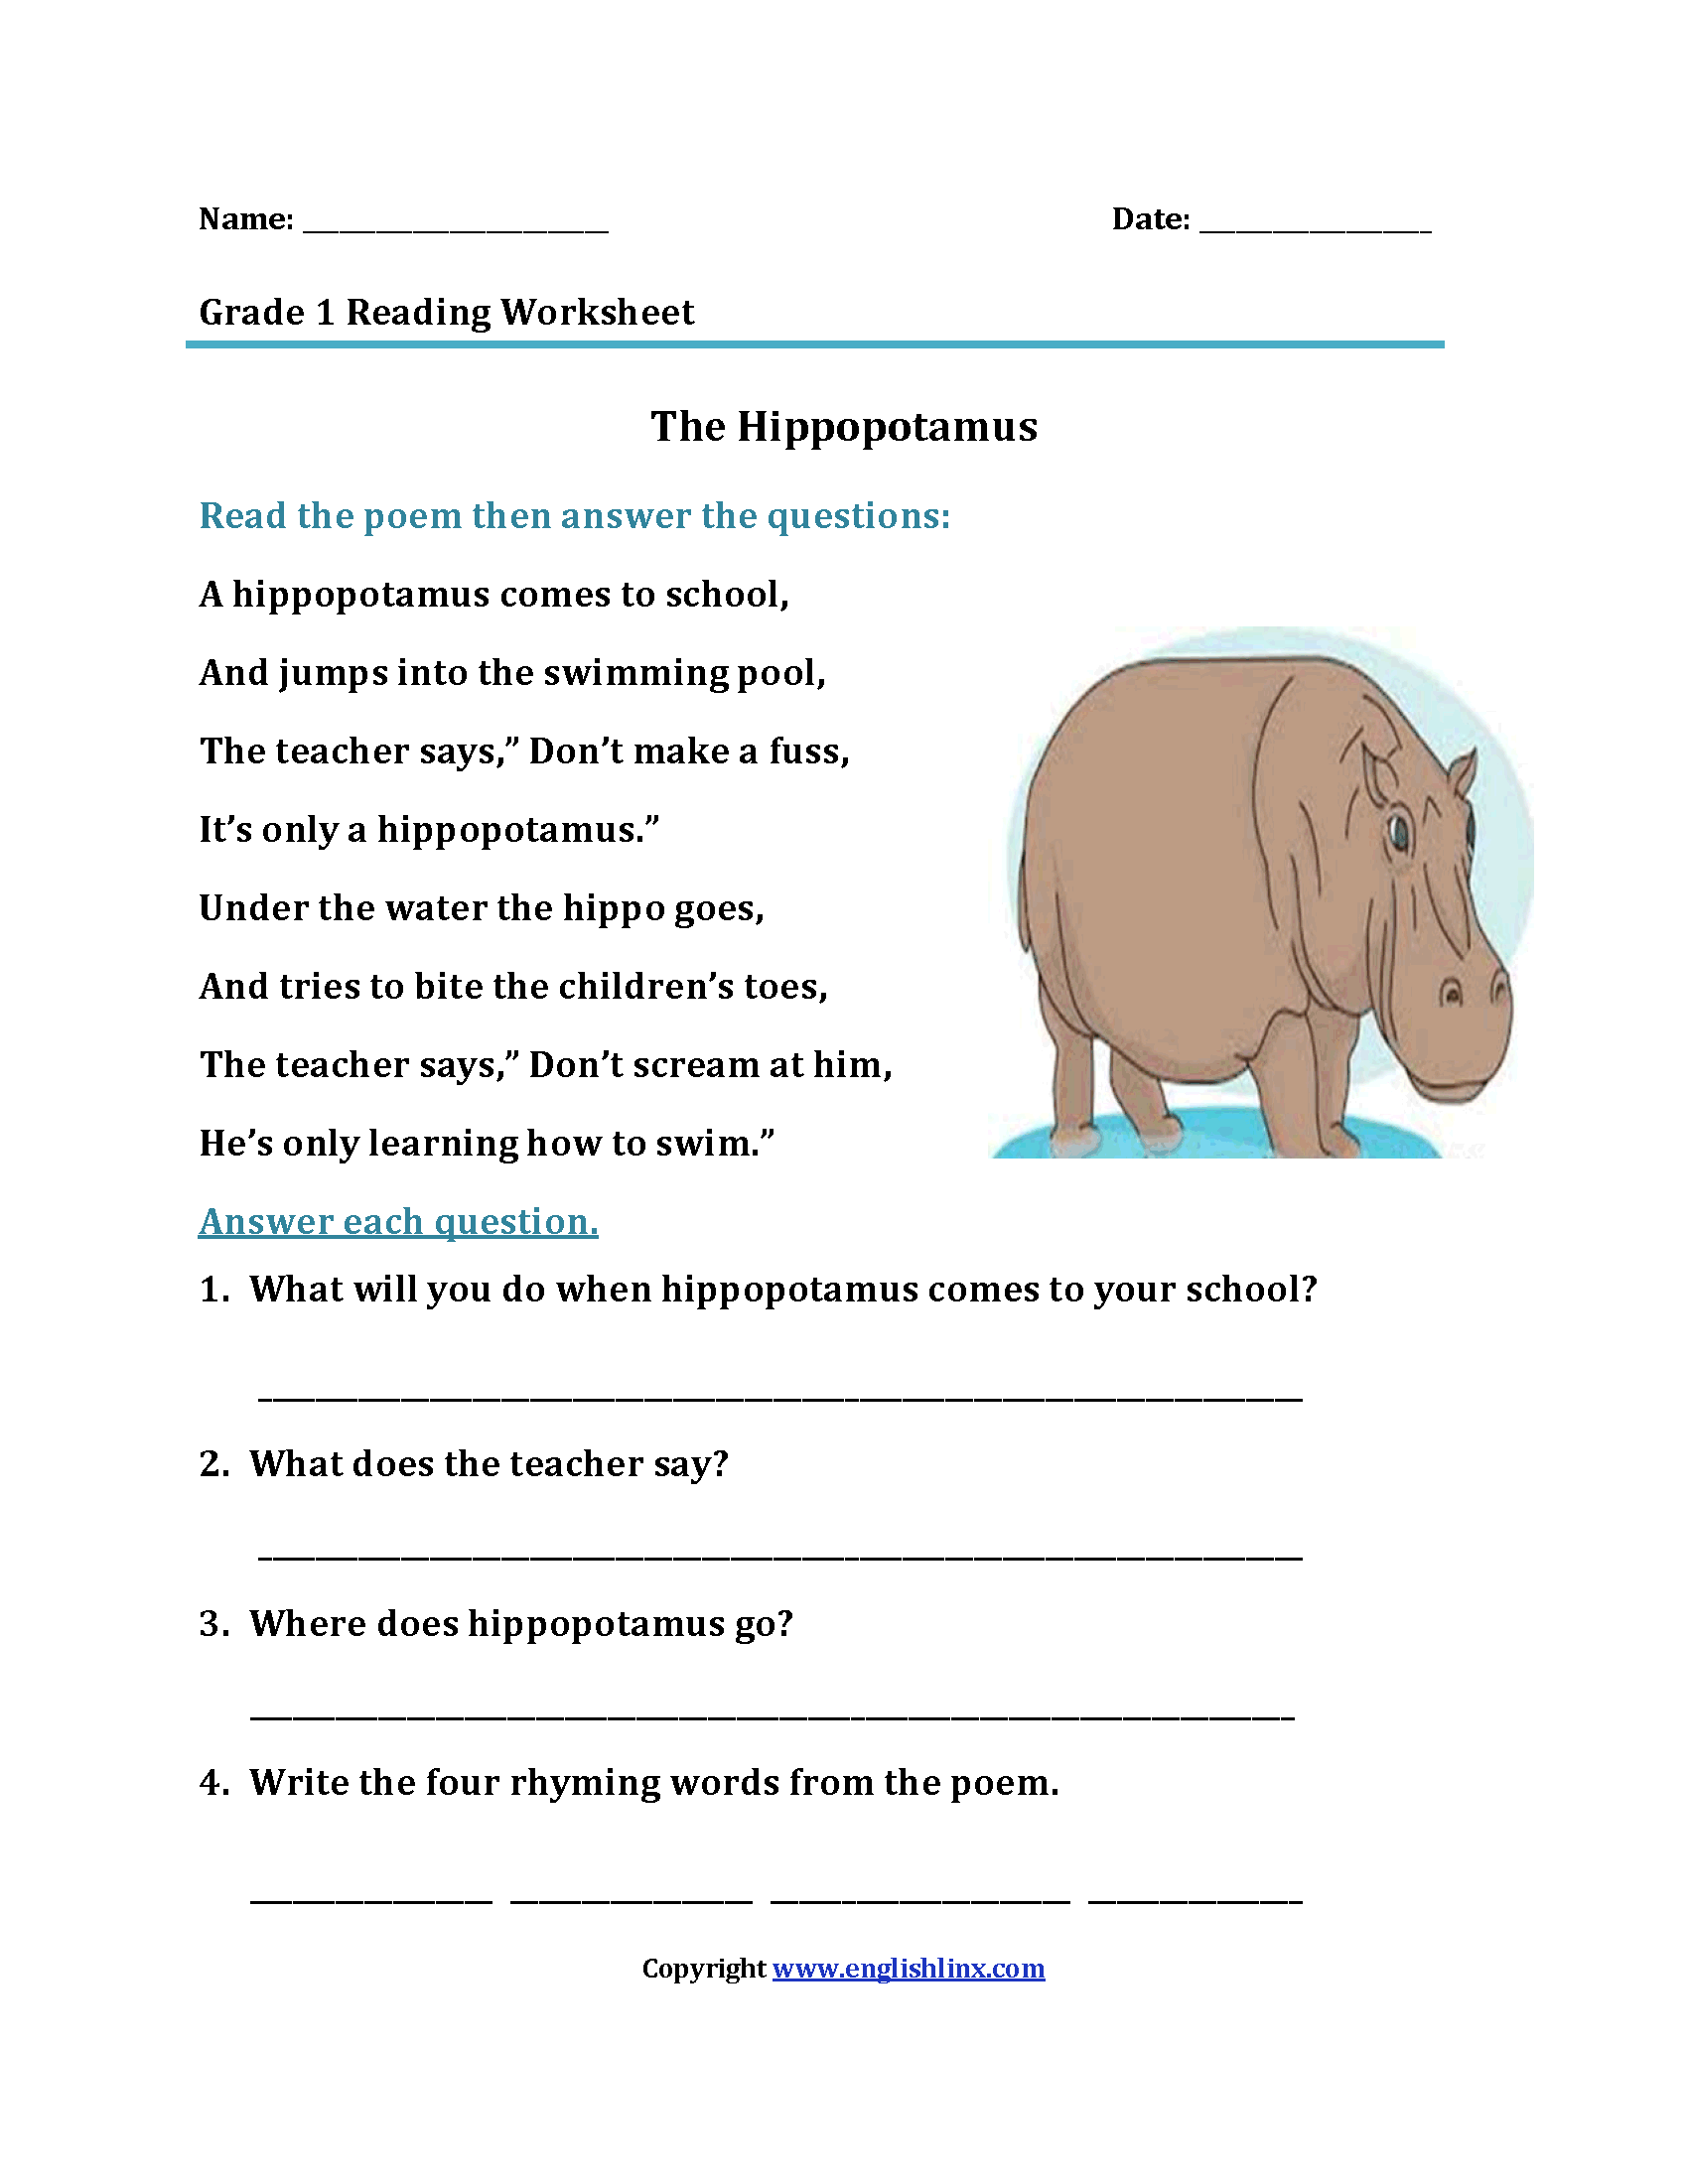 The Hippopotamus First Grade Reading Worksheets